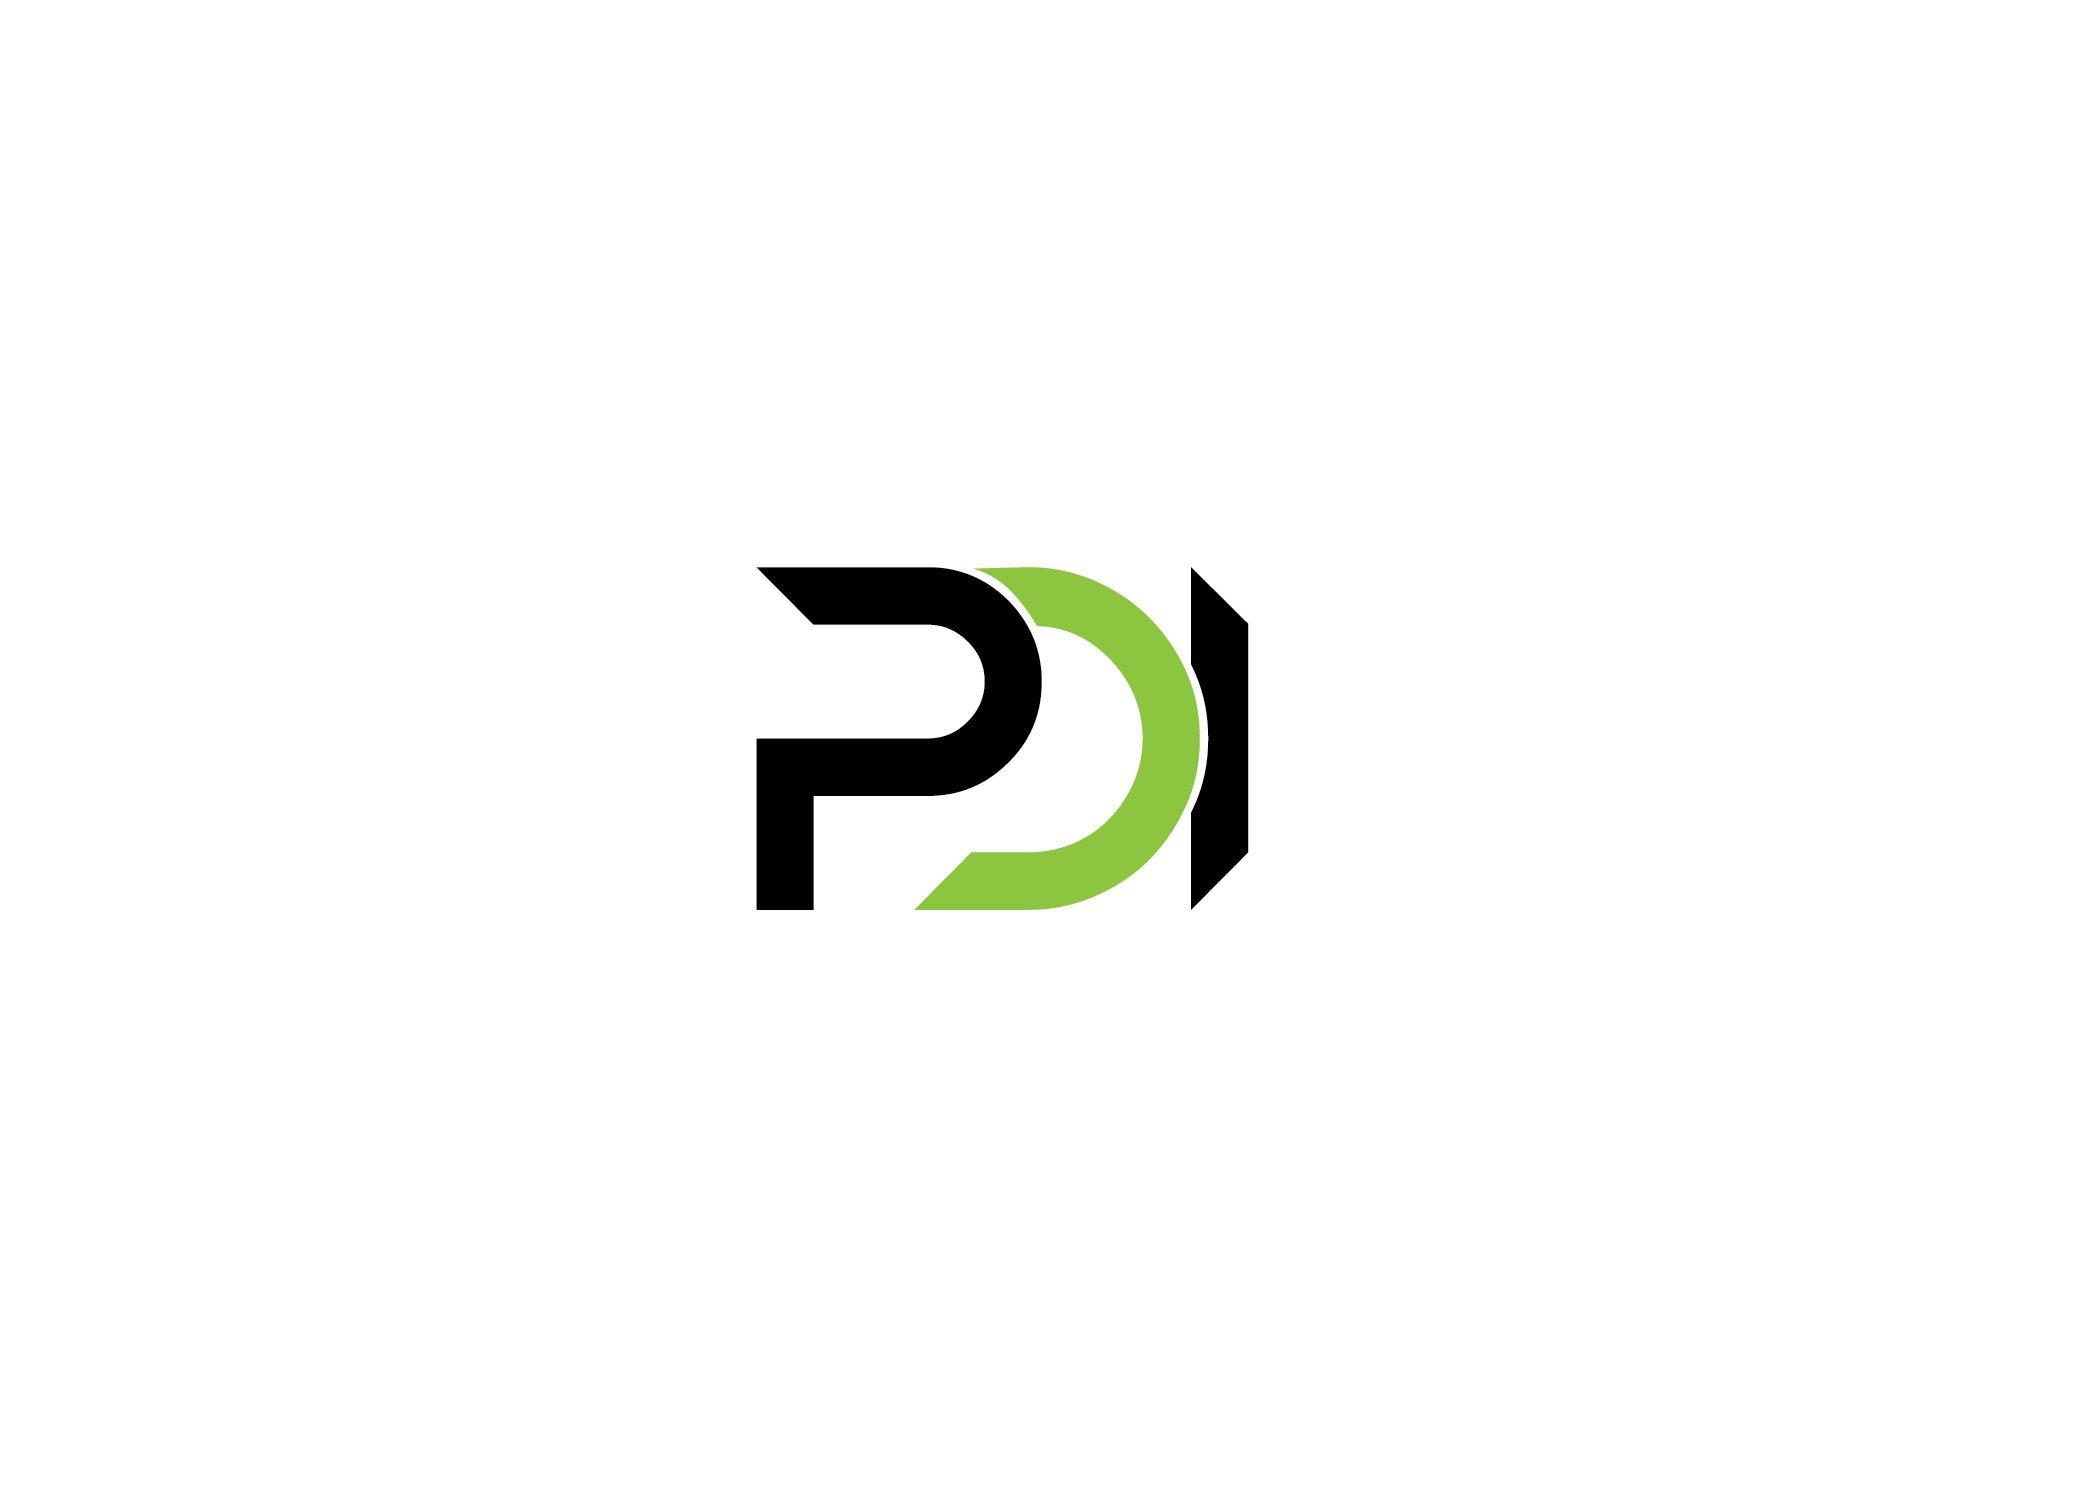 PDI Logo - pdi logo crop 1